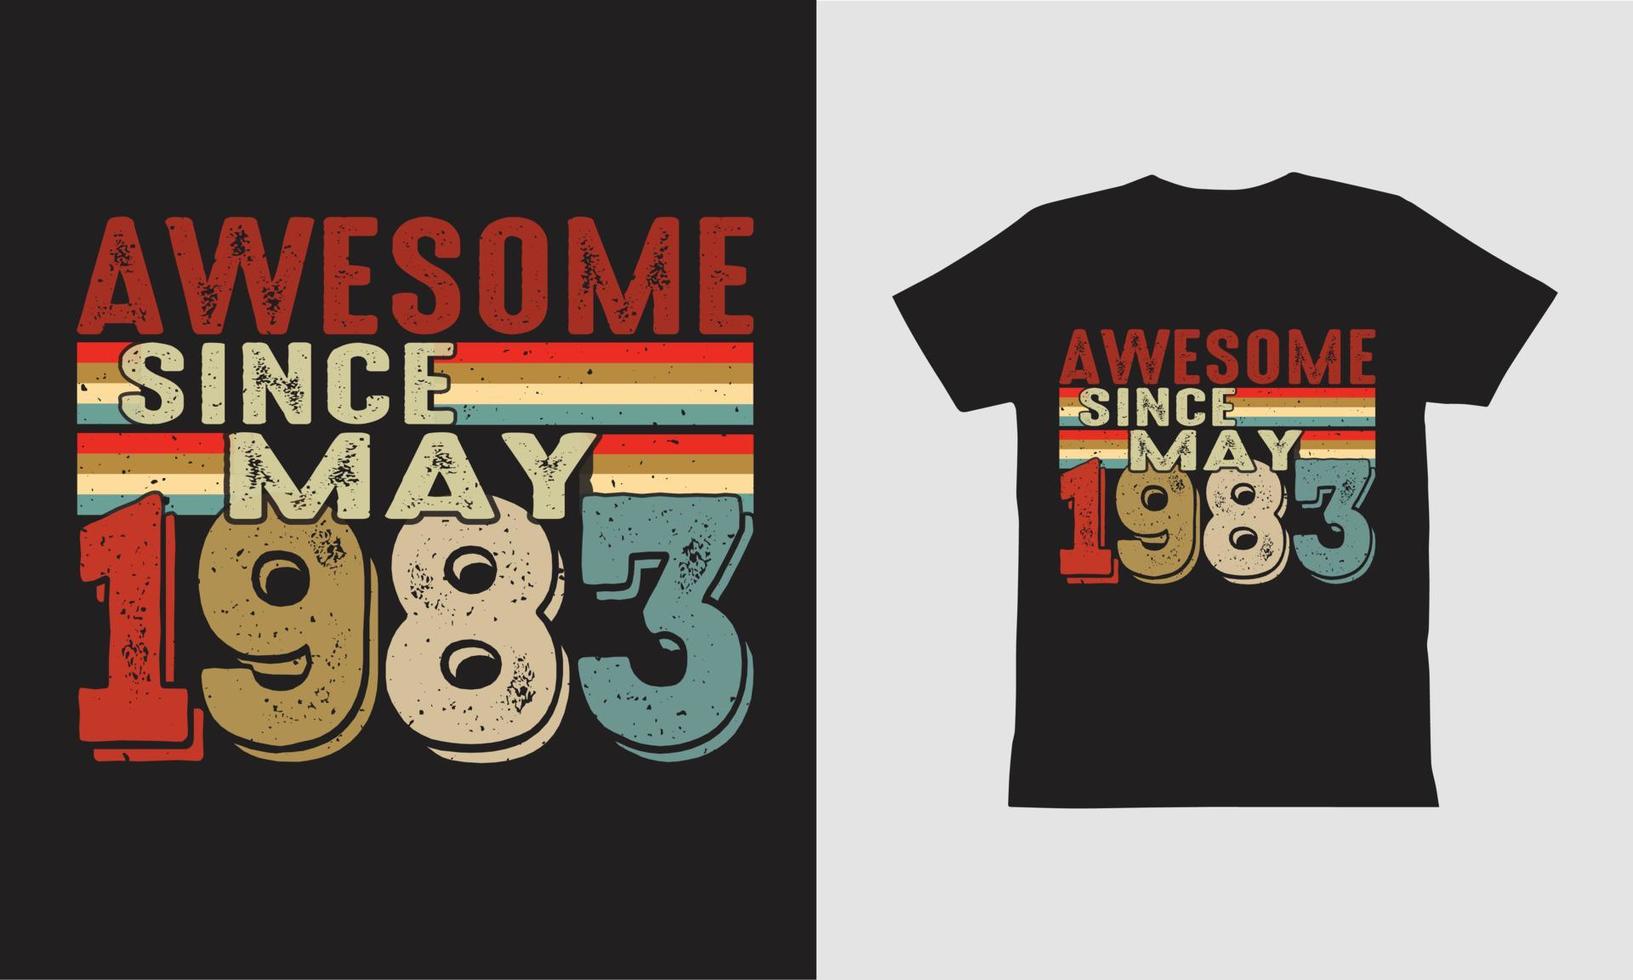 incrível desde junho de 1983 design de camiseta. vetor